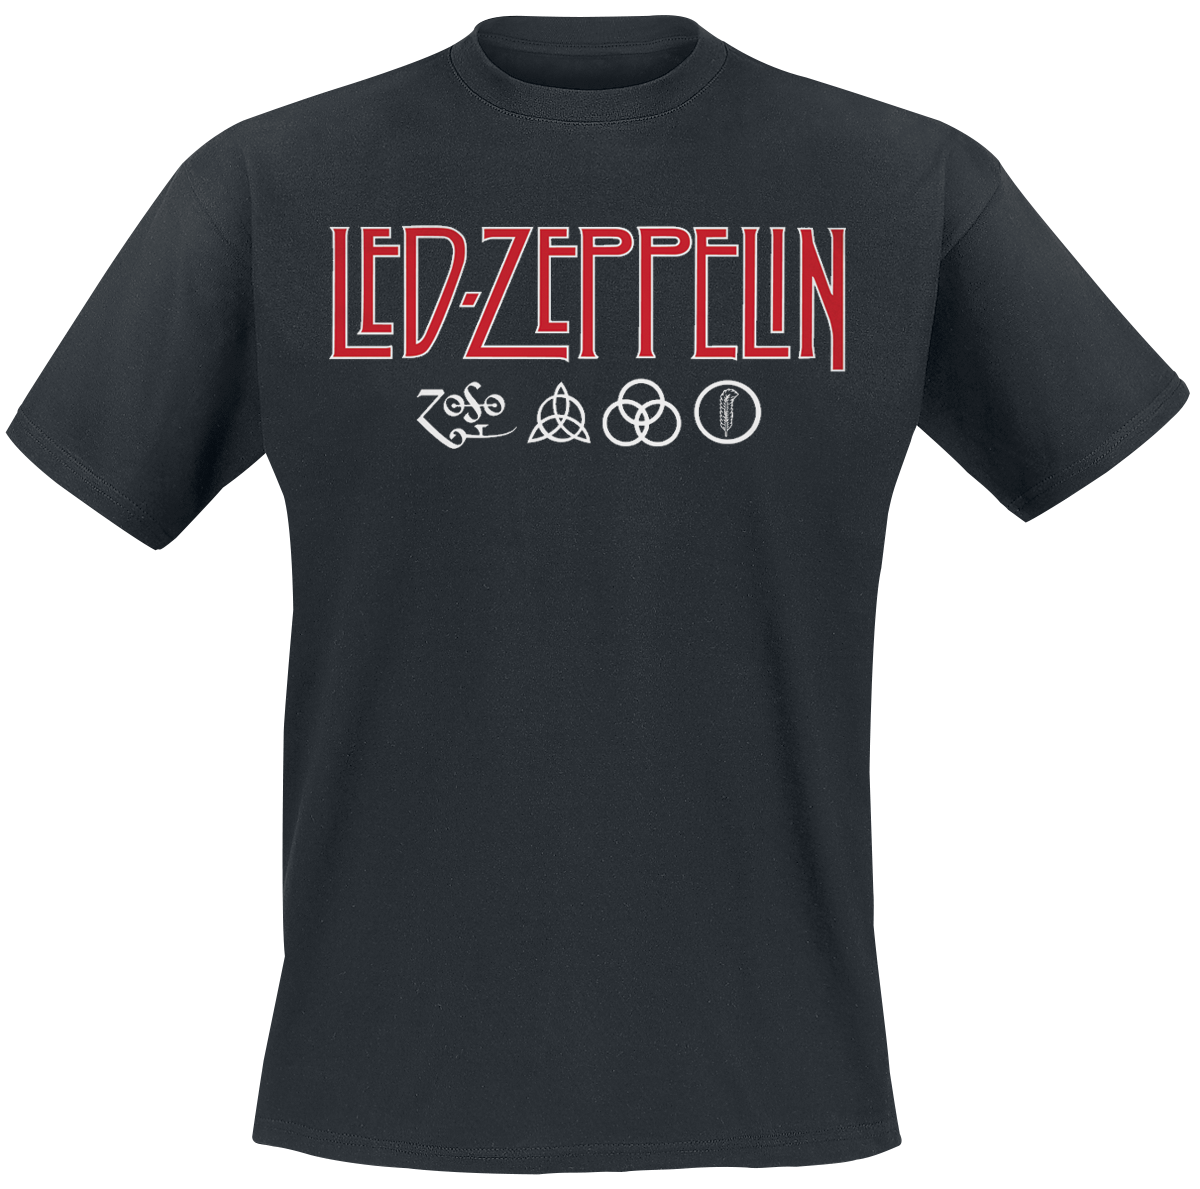 Led Zeppelin - Logo & Symbols - T-Shirt - schwarz